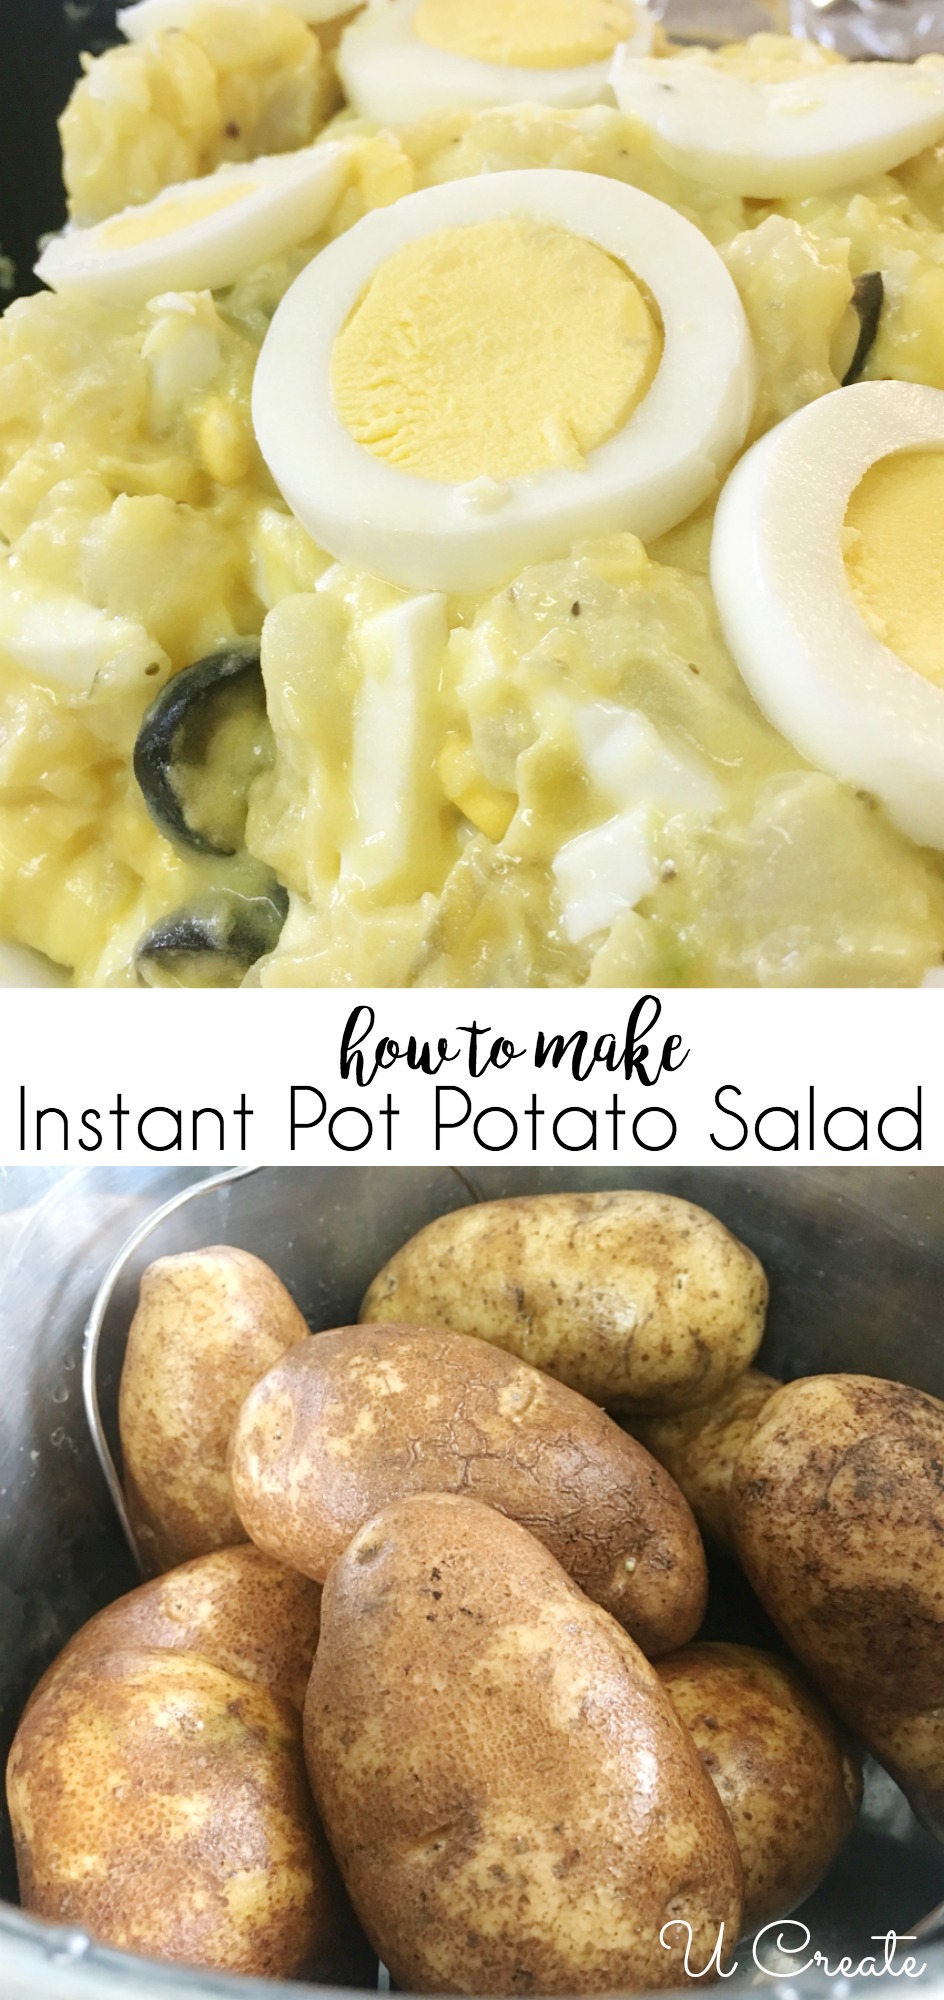 http://www.u-createcrafts.com/wp-content/uploads/2018/05/instant-pot-potato-salad-1.jpg